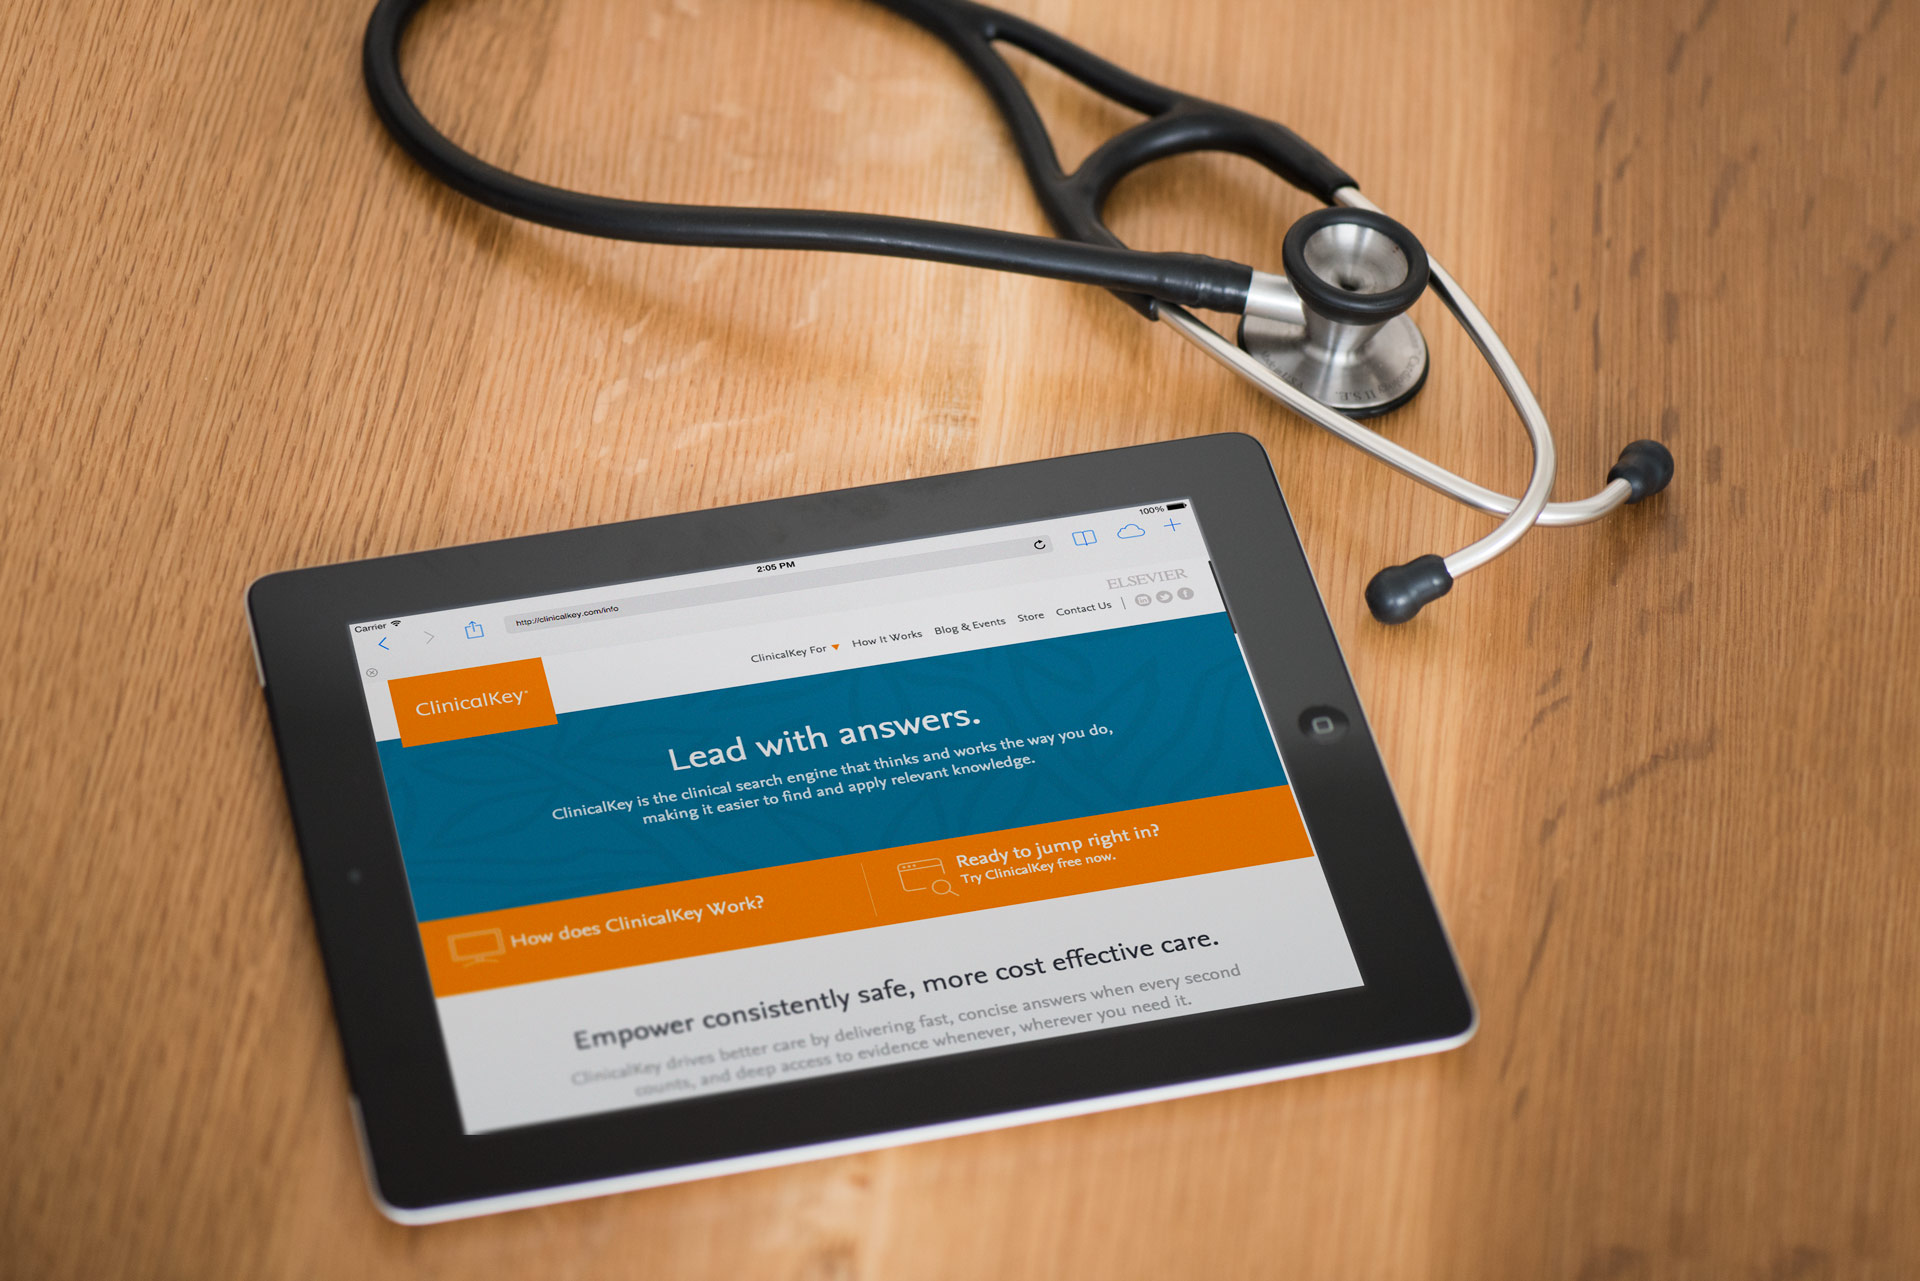 ClinicalKey Branding and Website Design on an iPad